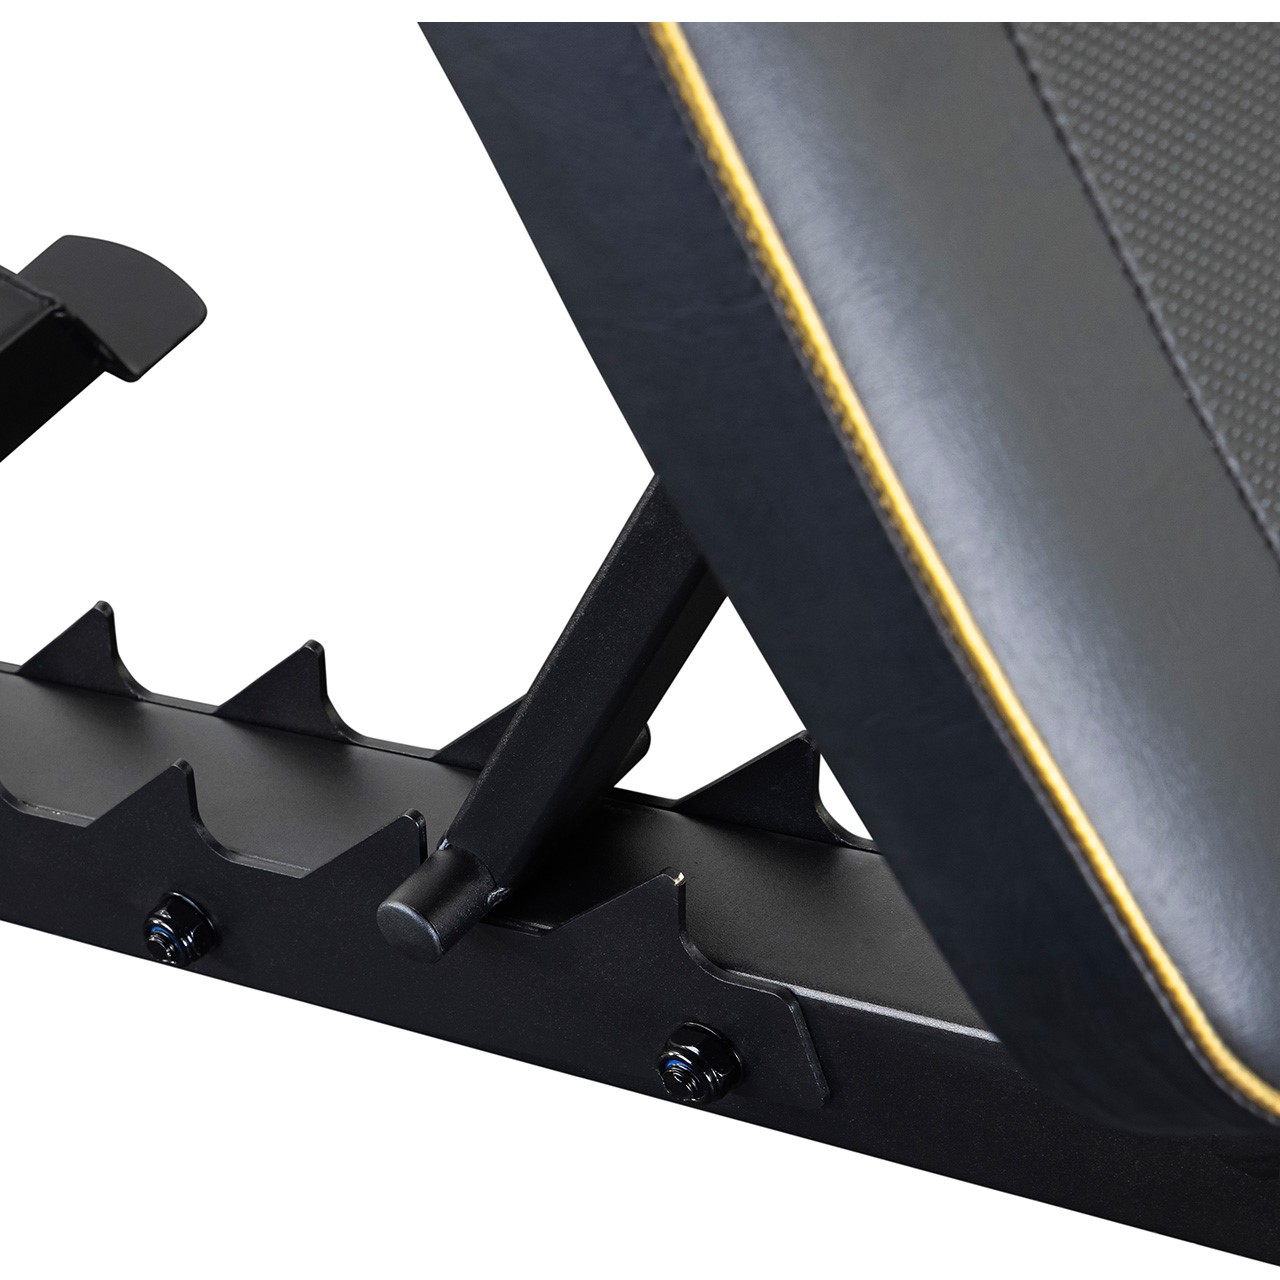 Tunturi Centuri Adustable Utility Weight Bench with Ab and Leg Trainer UB100